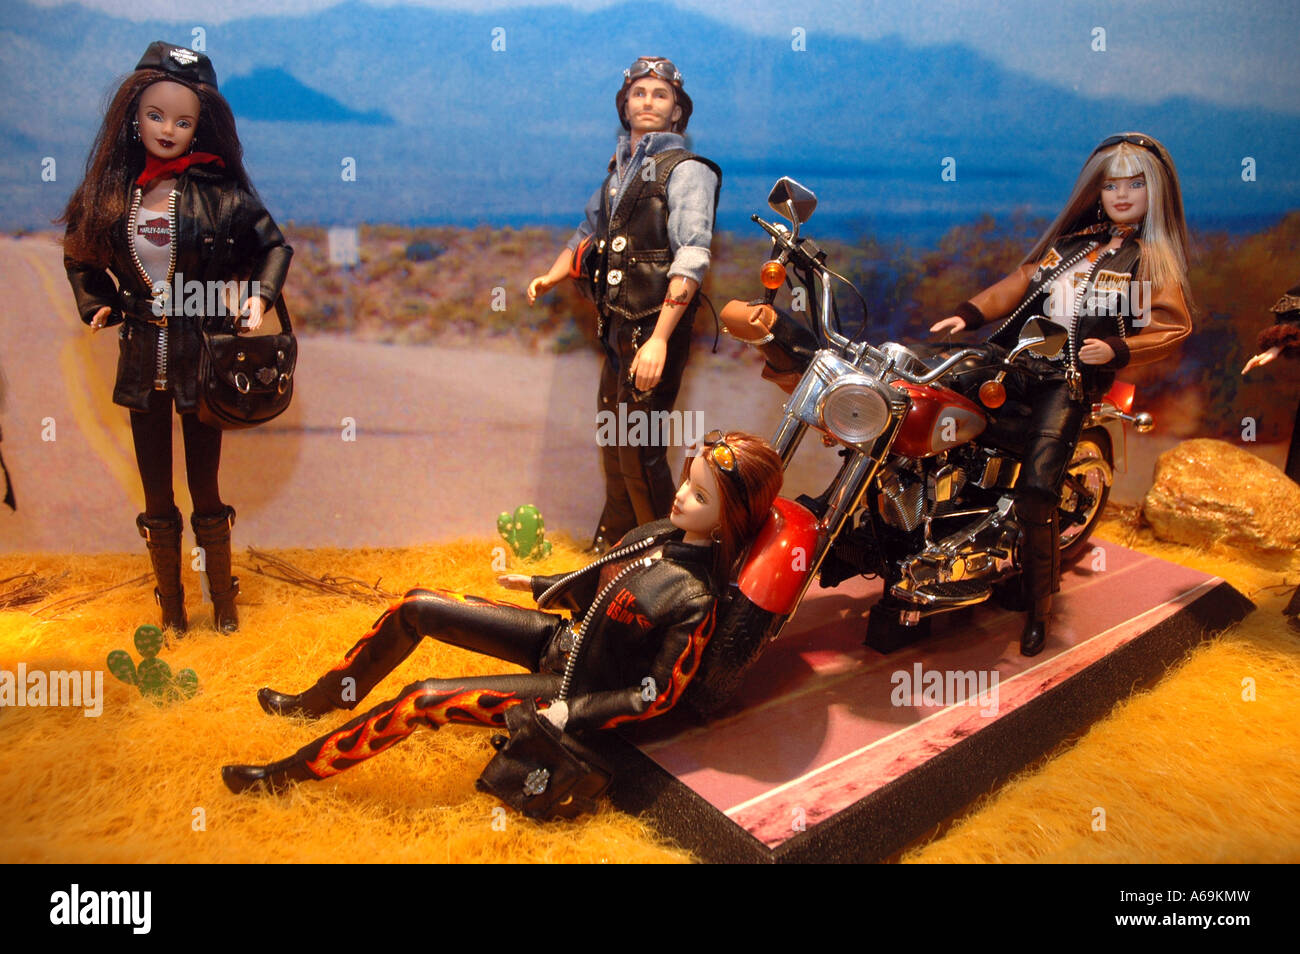 harley davidson barbie motorcycle